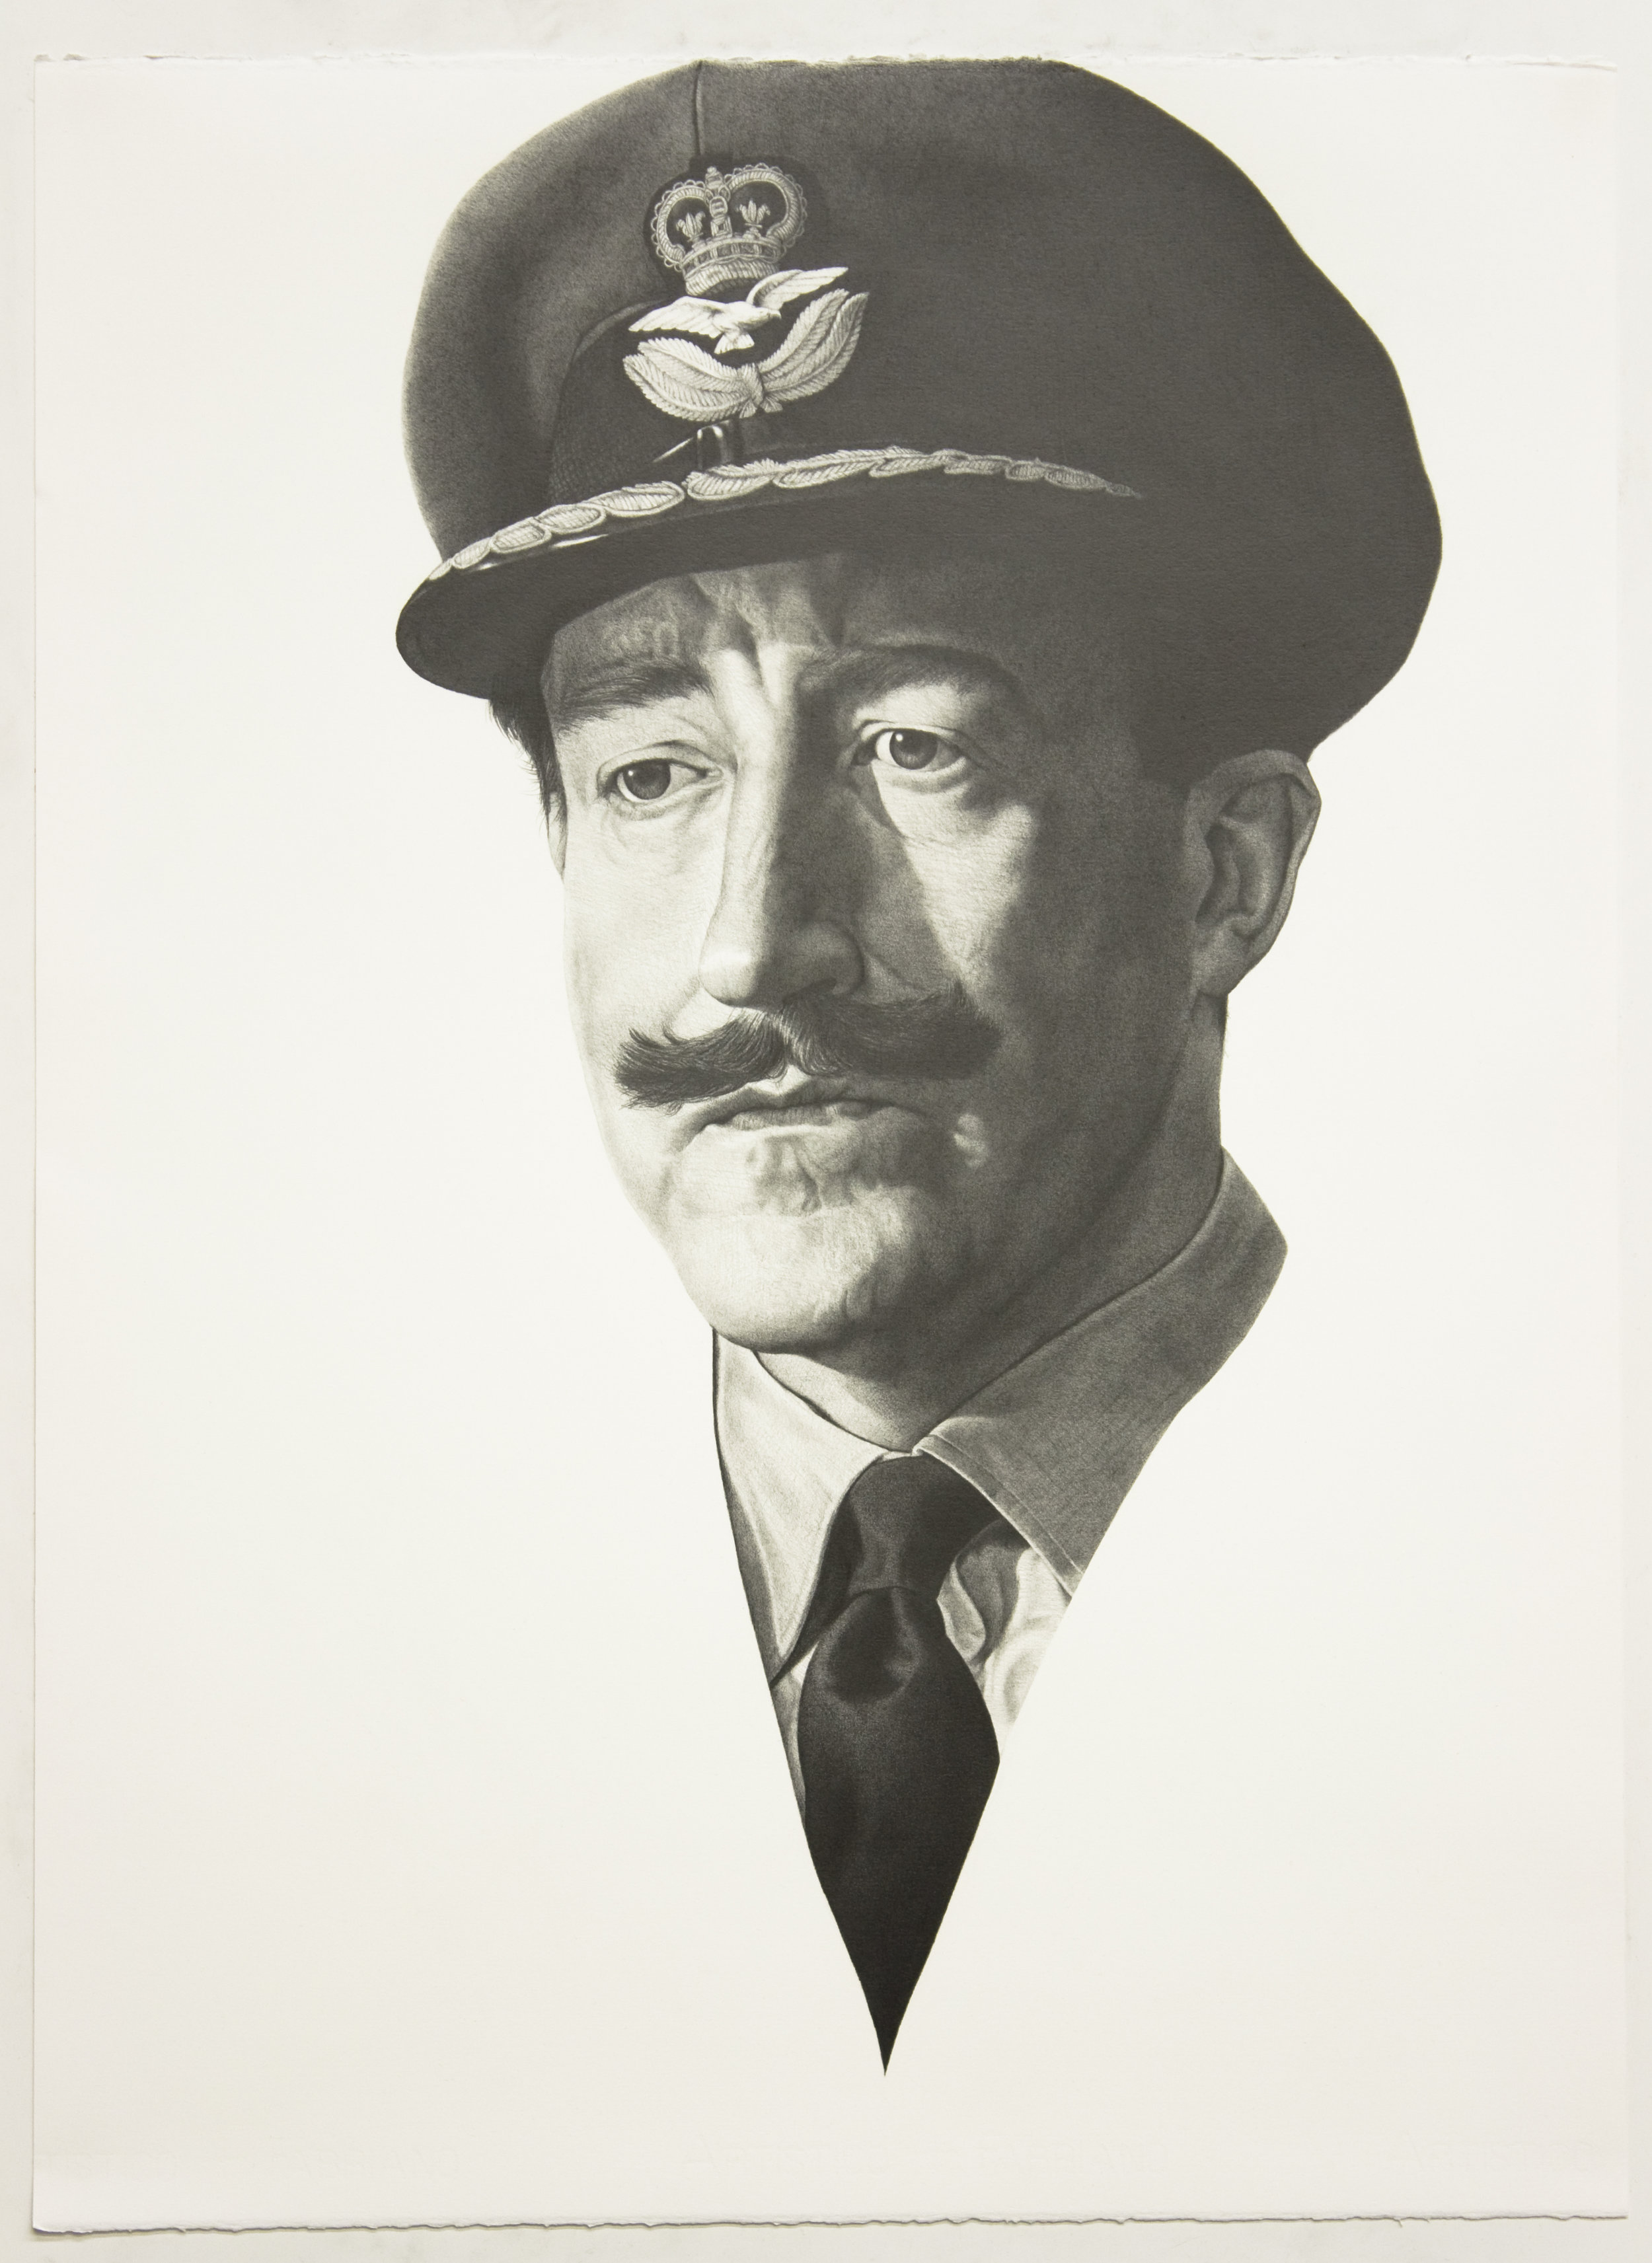  “post-human (Group Captain Lionel Mandrake)” graphite on paper, 56 x 76 cm, 2013.  